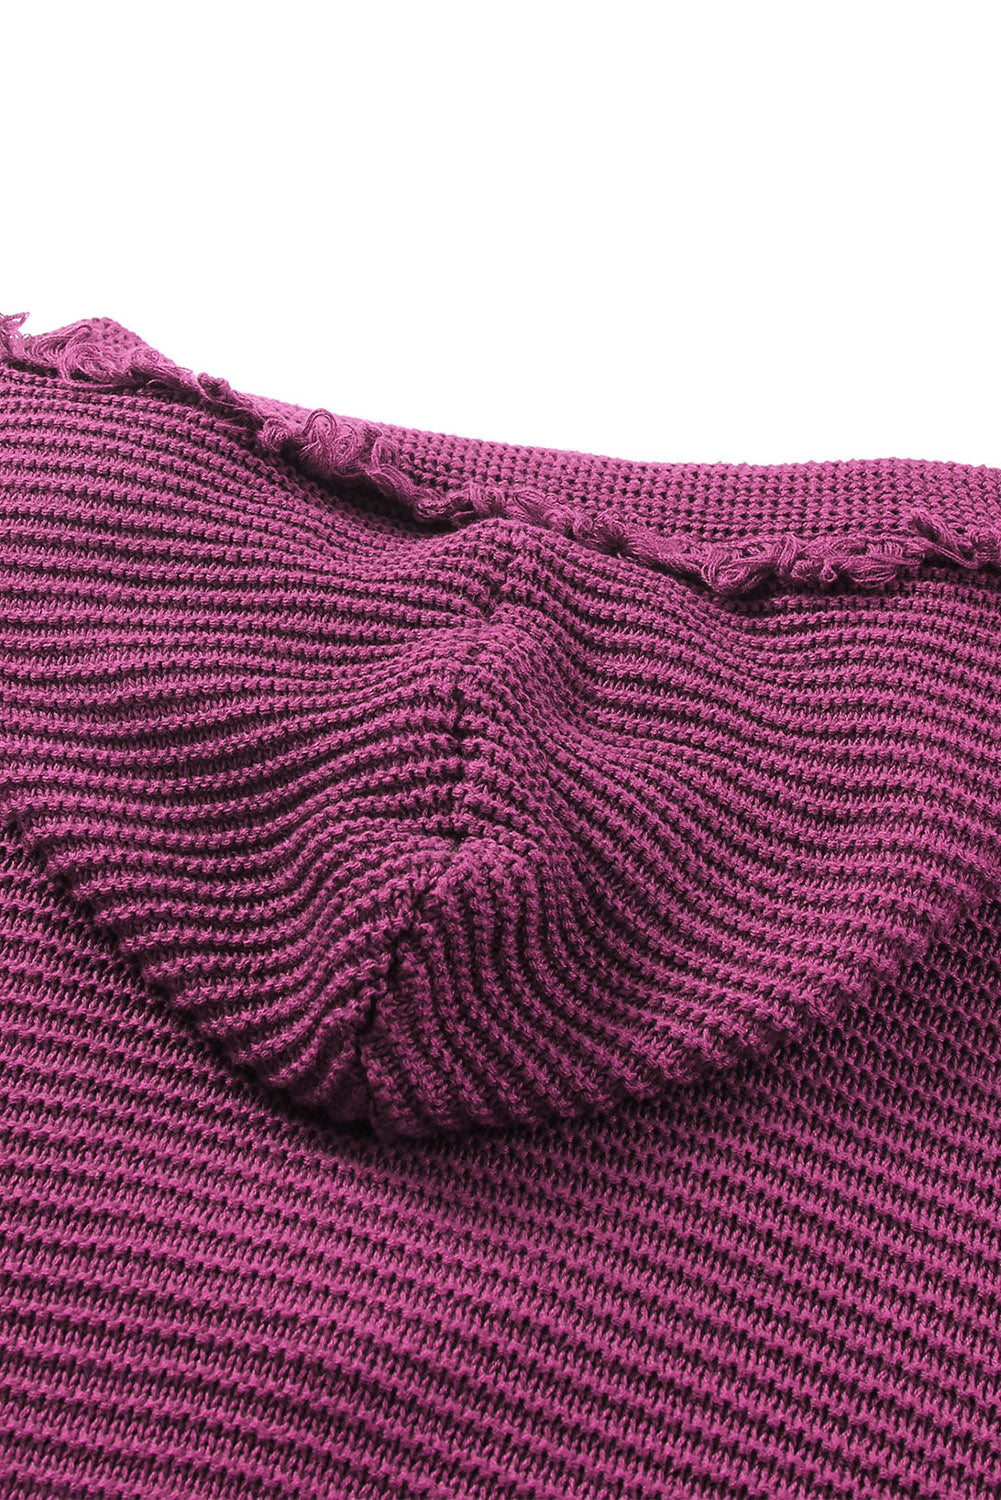 Woven Right Horizontal Ribbing Fringe Trim Hooded Sweater - Guy Christopher 